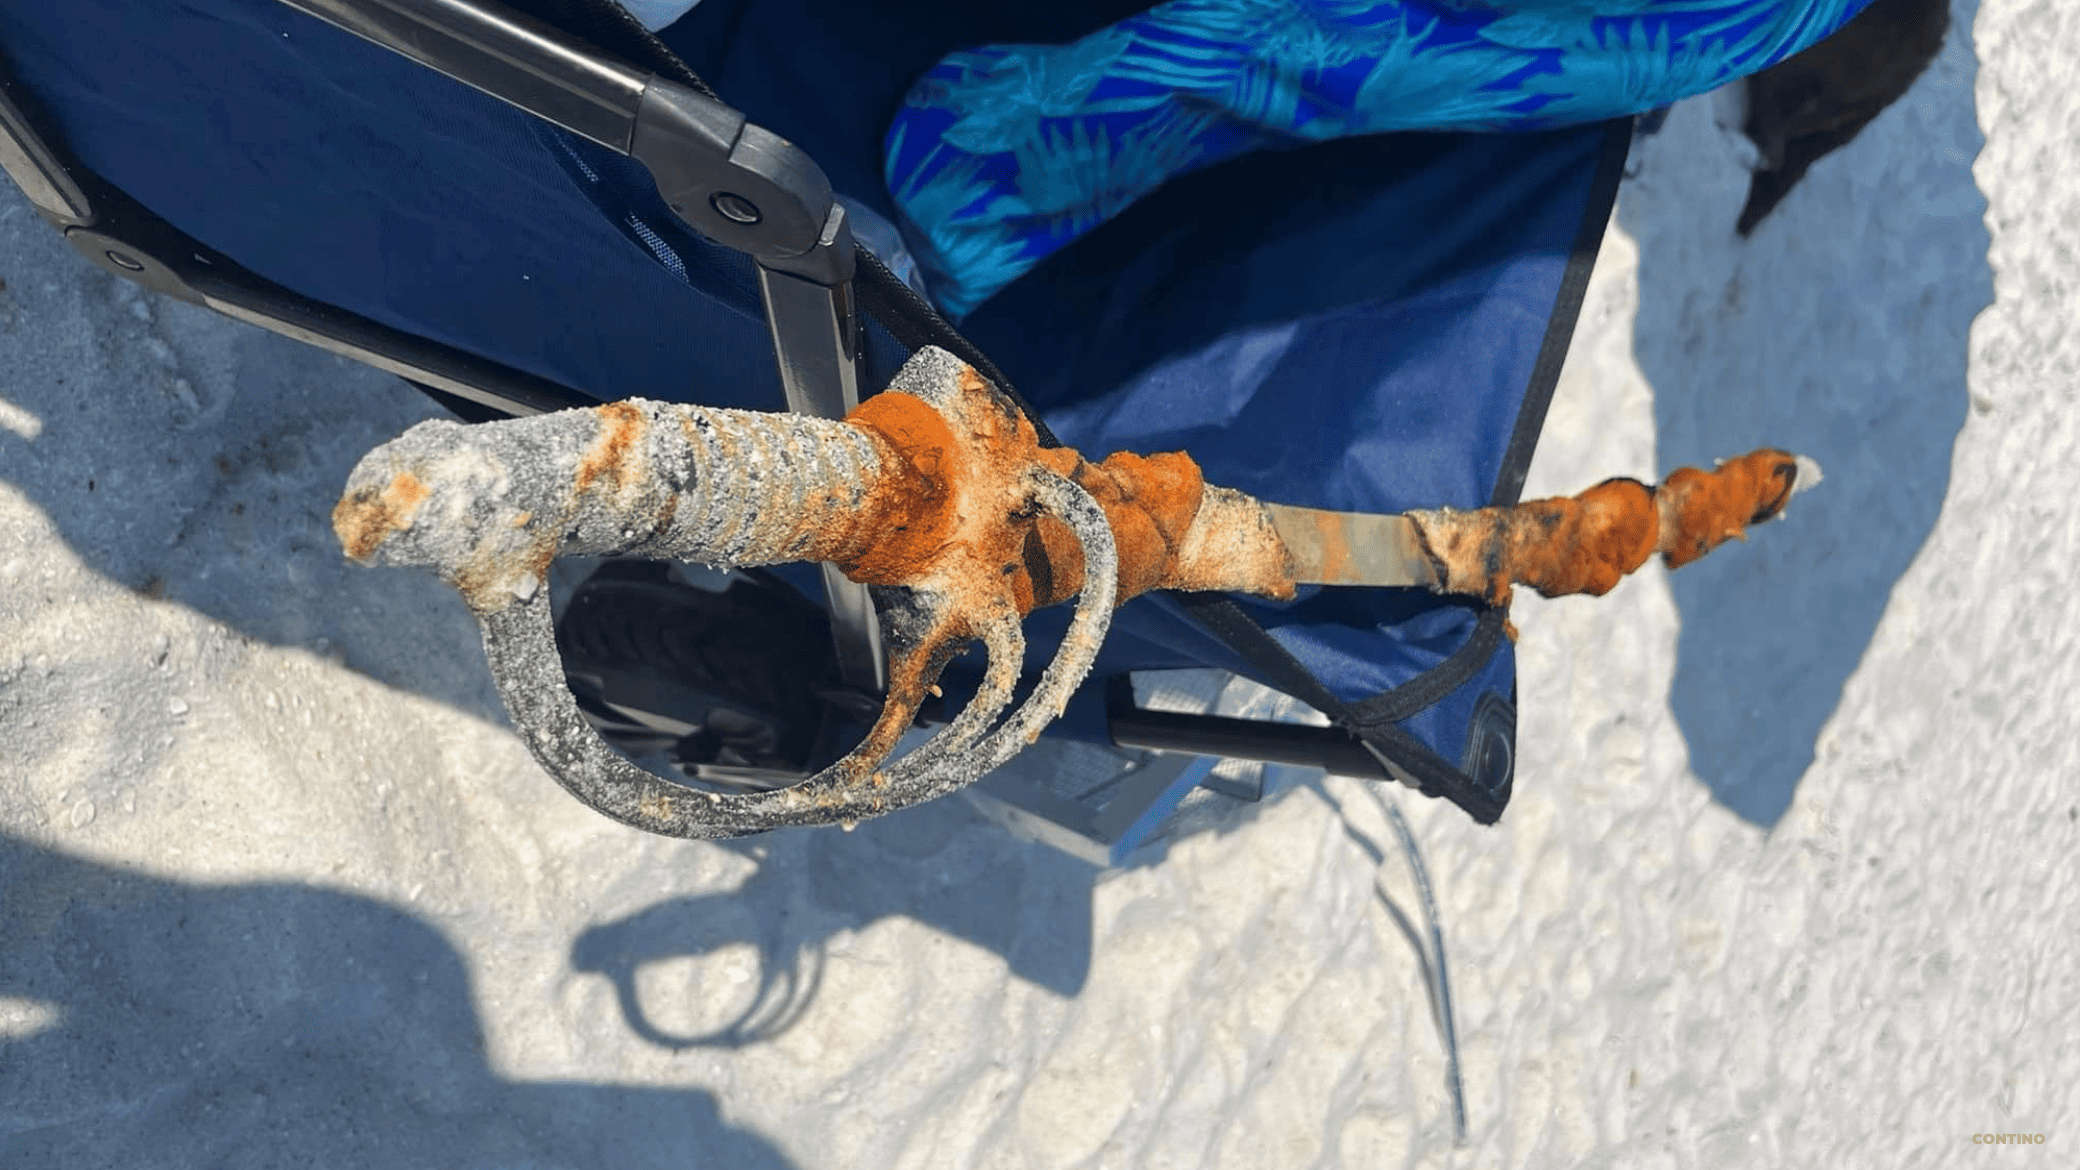 Ancient Sword Found On Florida Beach